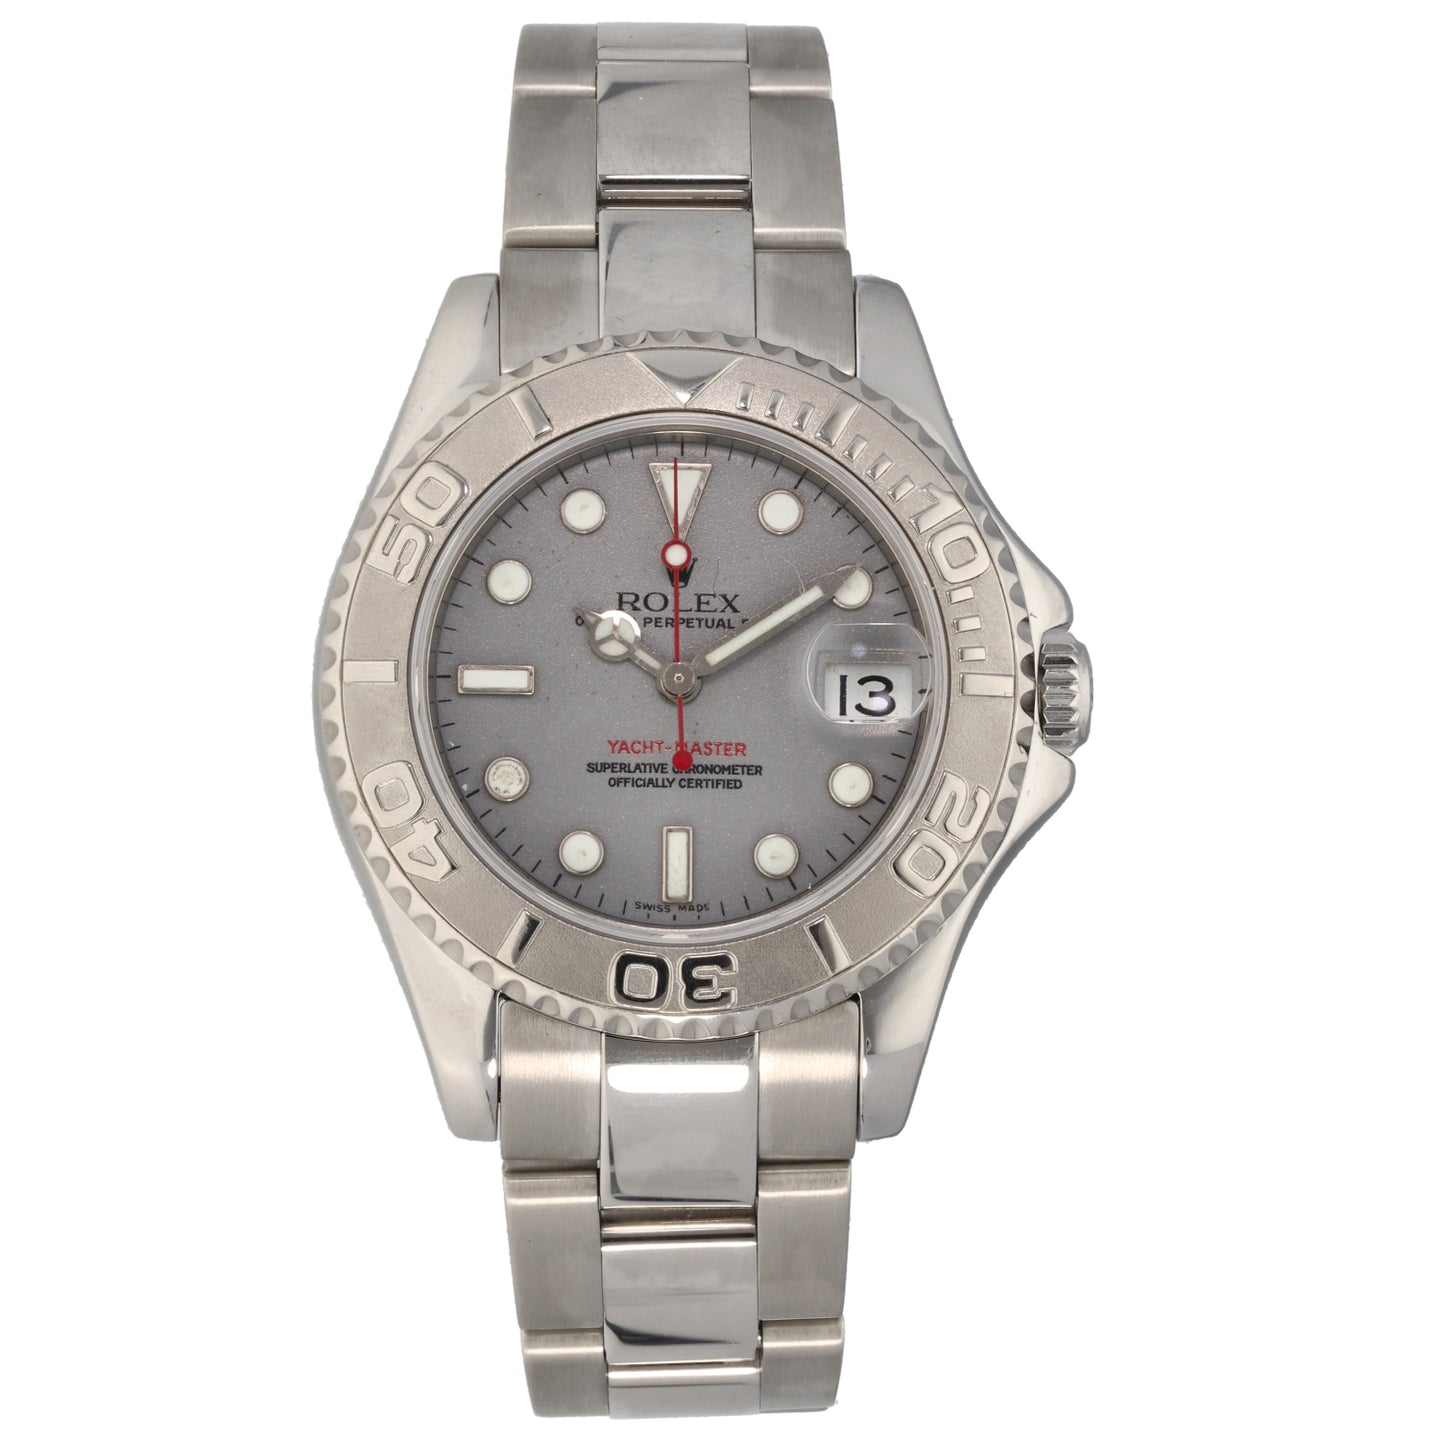 Rolex Yacht Master 168622 34mm Stainless Steel Watch